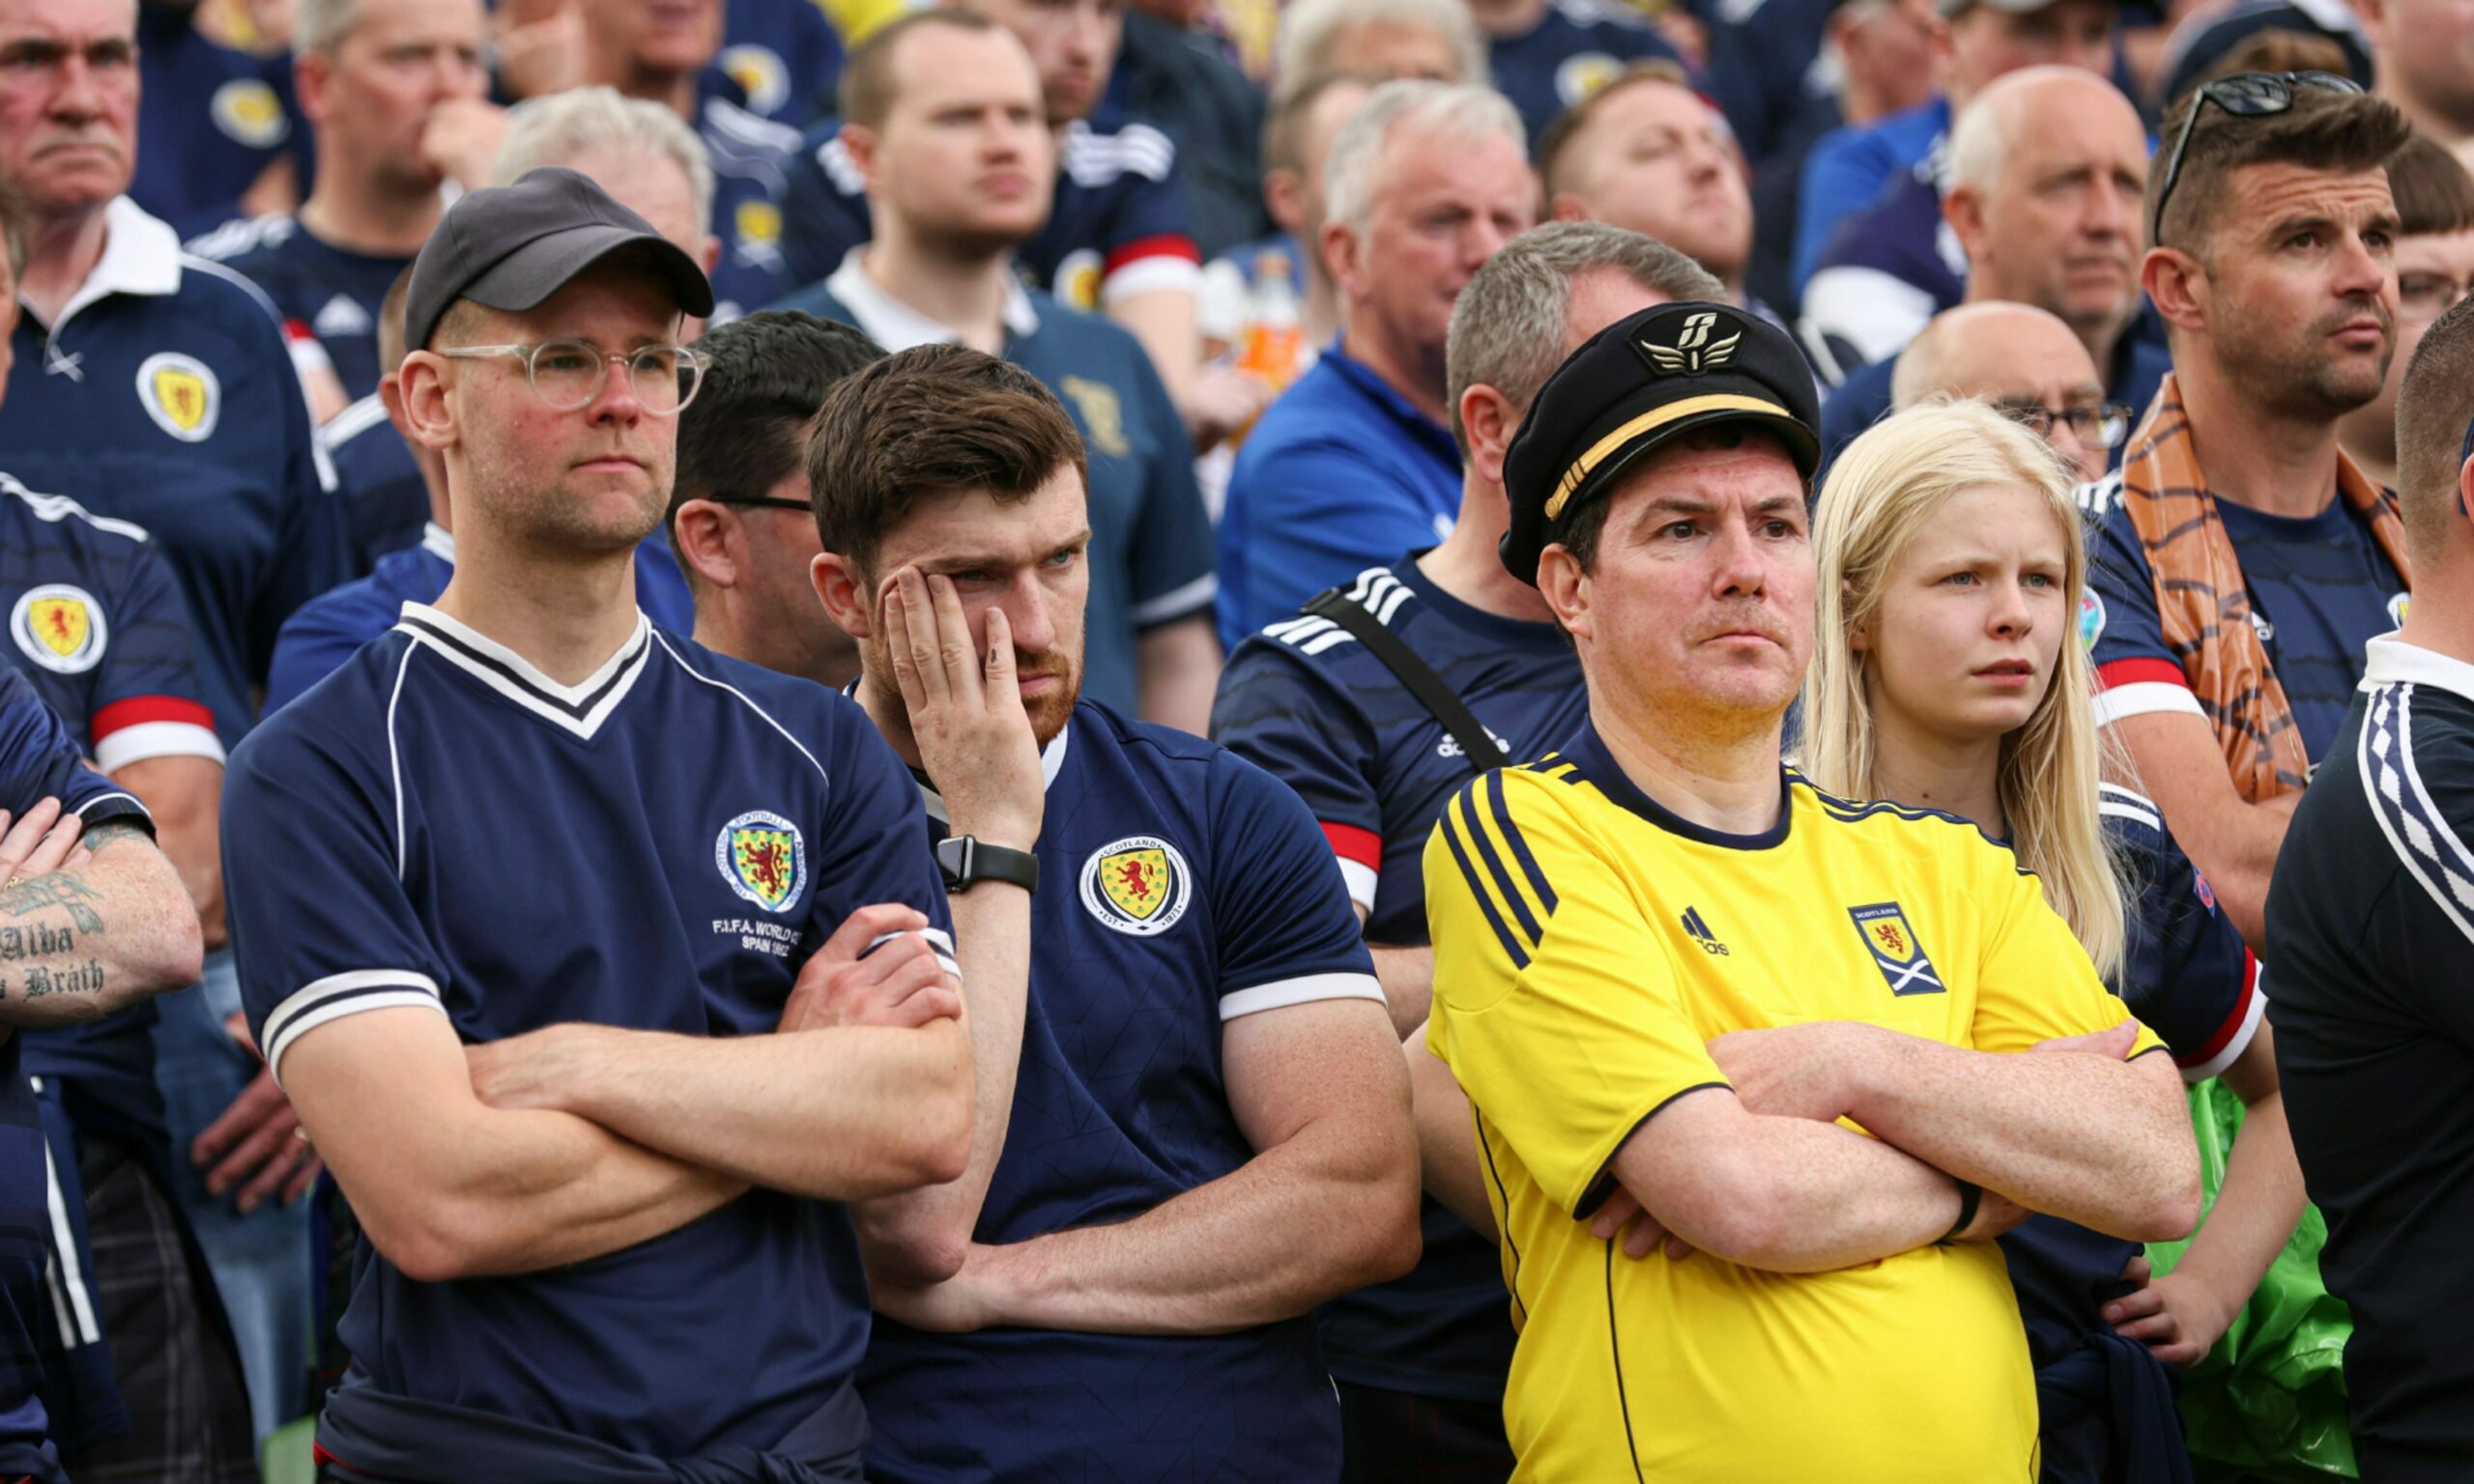 Scotland football fans look dejected after defeat in Dublin